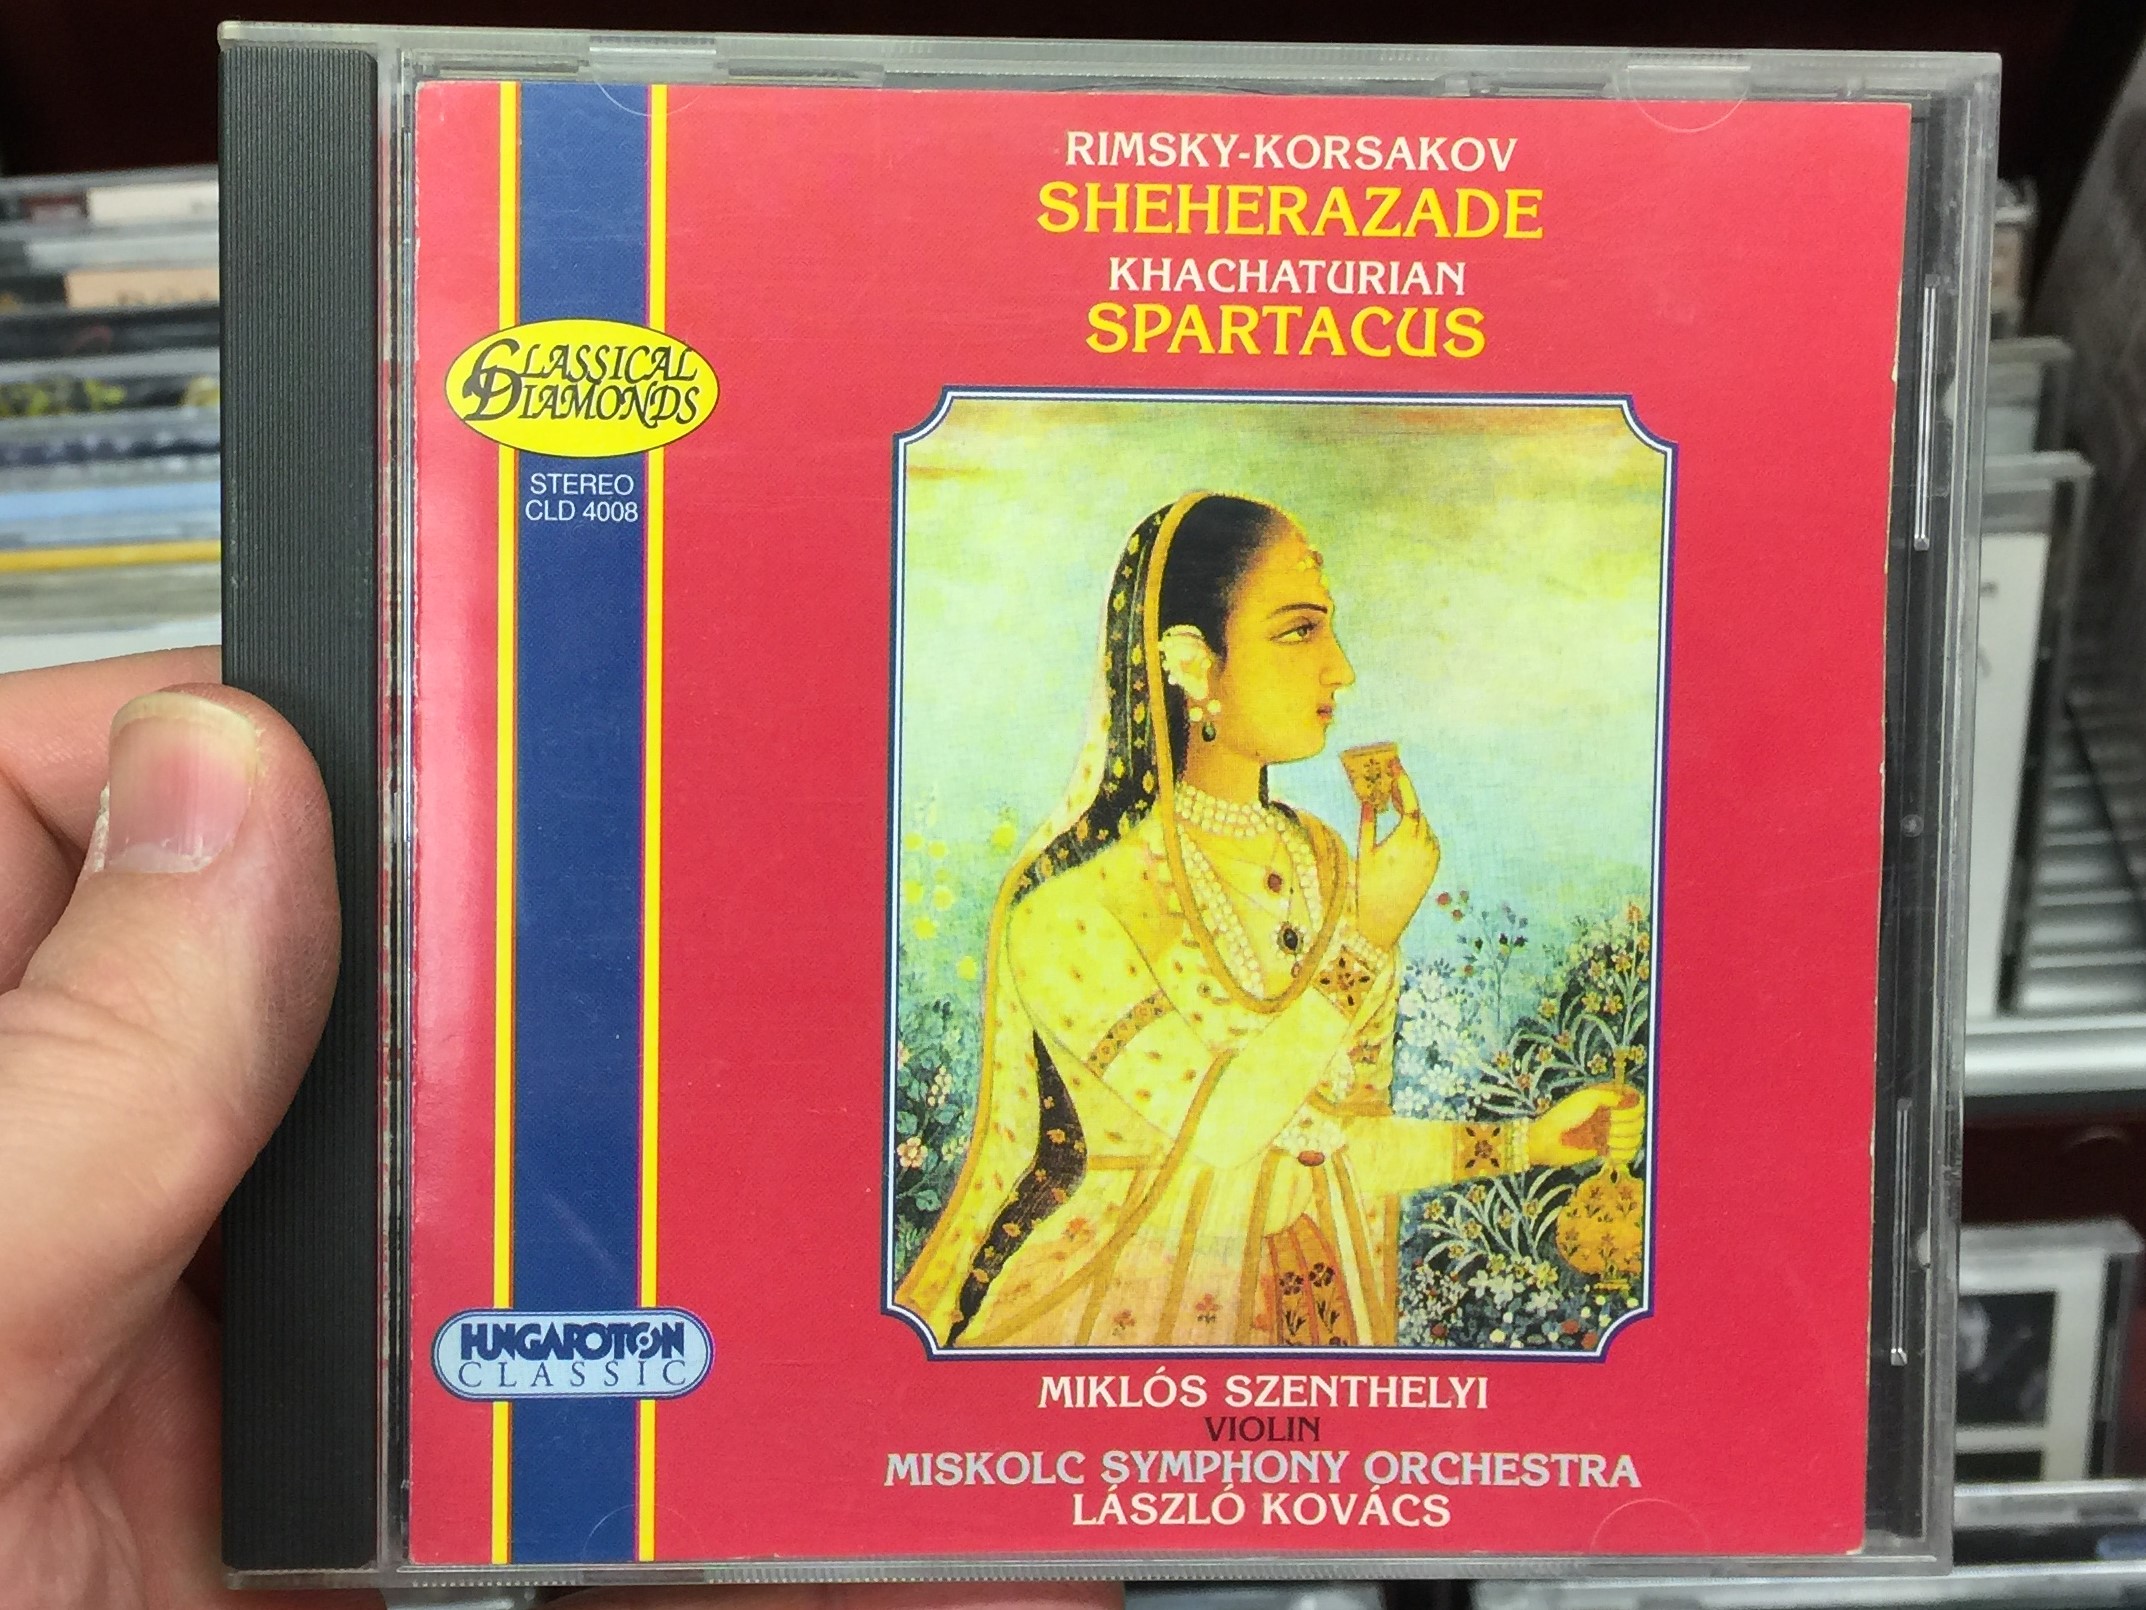 rimsky-korsakov-sheherazade-khachaturian-spartacus-miklos-szenthelyi-violin-miskolc-symphony-orchestra-laszlo-kovacs-hungaroton-classic-audio-cd-1996-stereo-cld-4008-1-.jpg